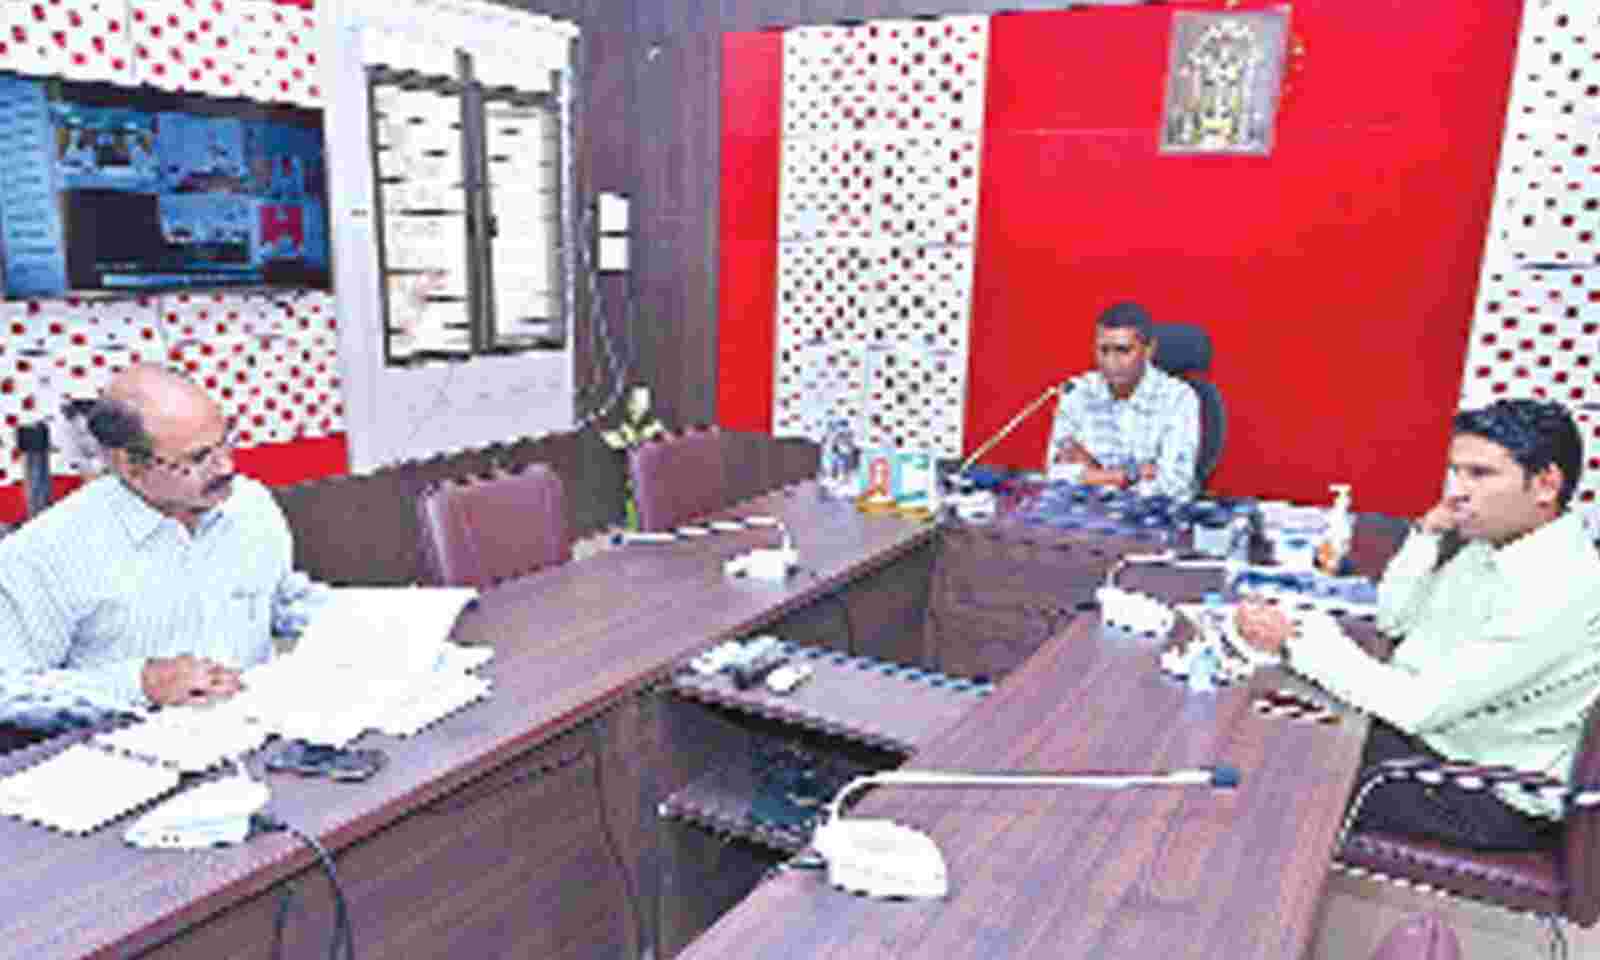 Hari Narayanan takes charge as Nellore Collector